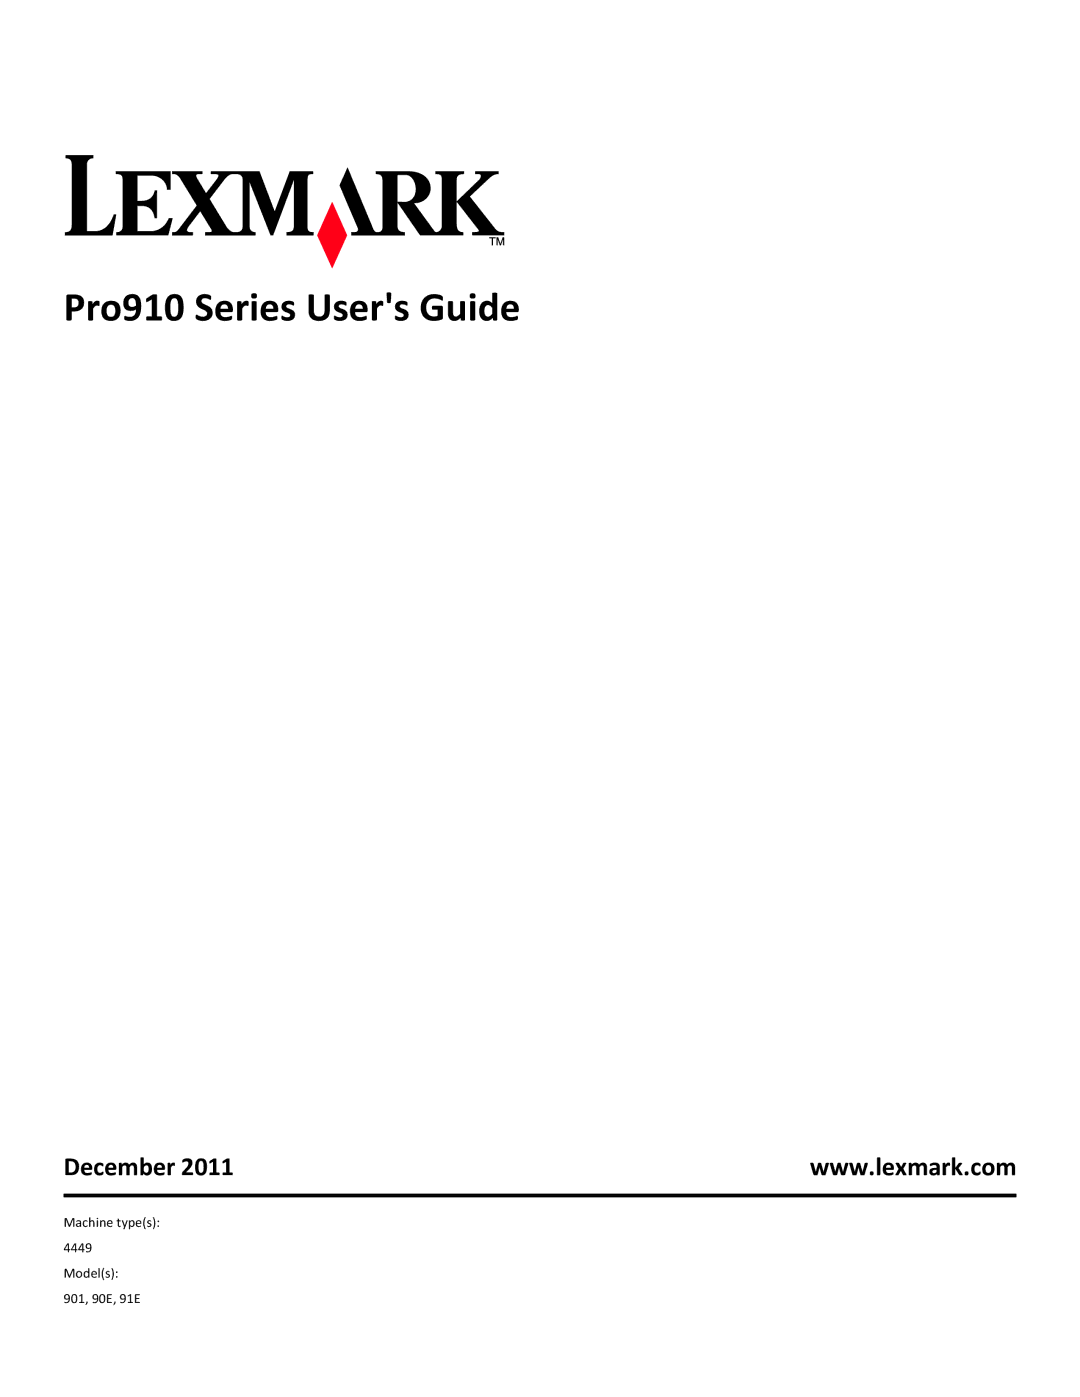 Lexmark 90T9251, 901, 90E, 90T9250, 90T9200, 91E, Pro915 manual Pro910 Series Users Guide, December 